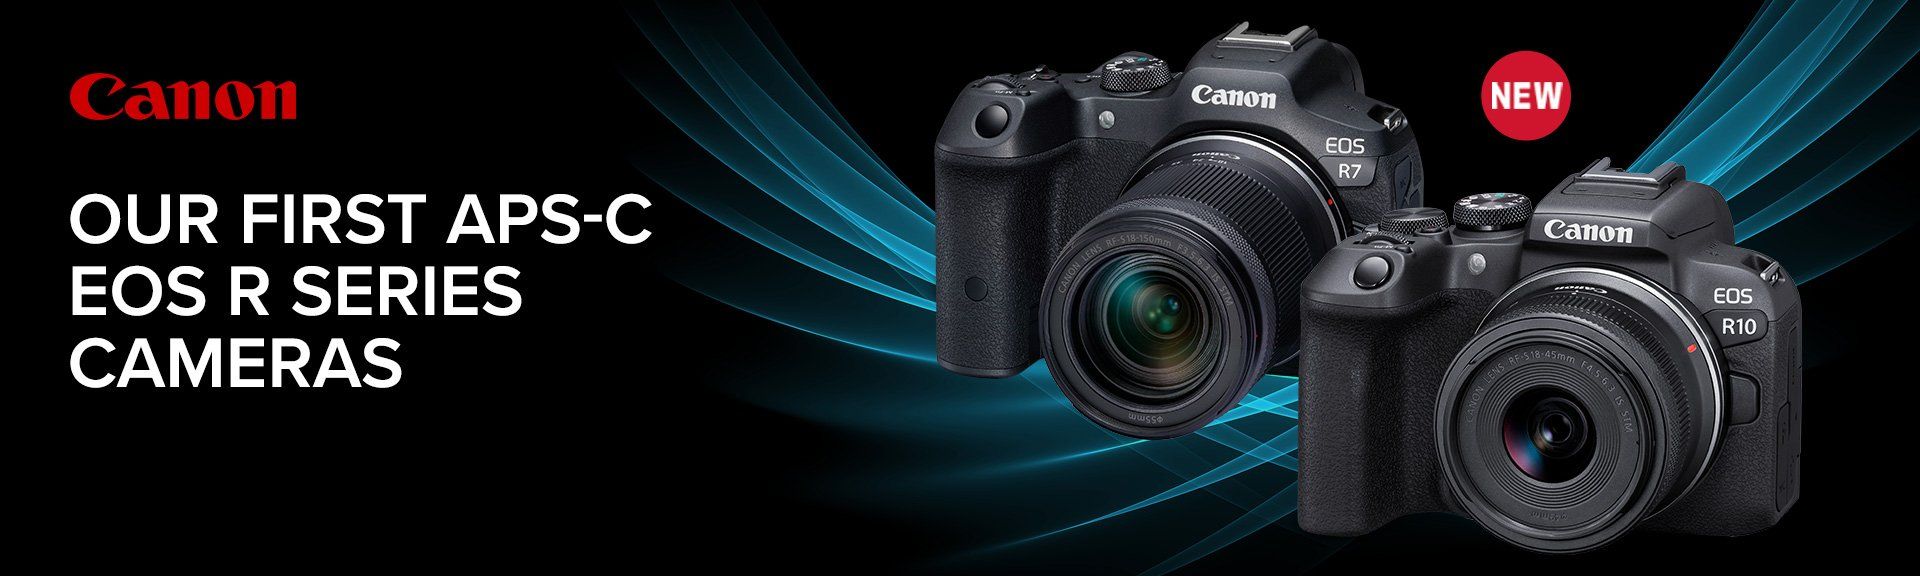 Meet the NEW Canon EOS R7 and Canon EOS R10 Mirrorless Cameras